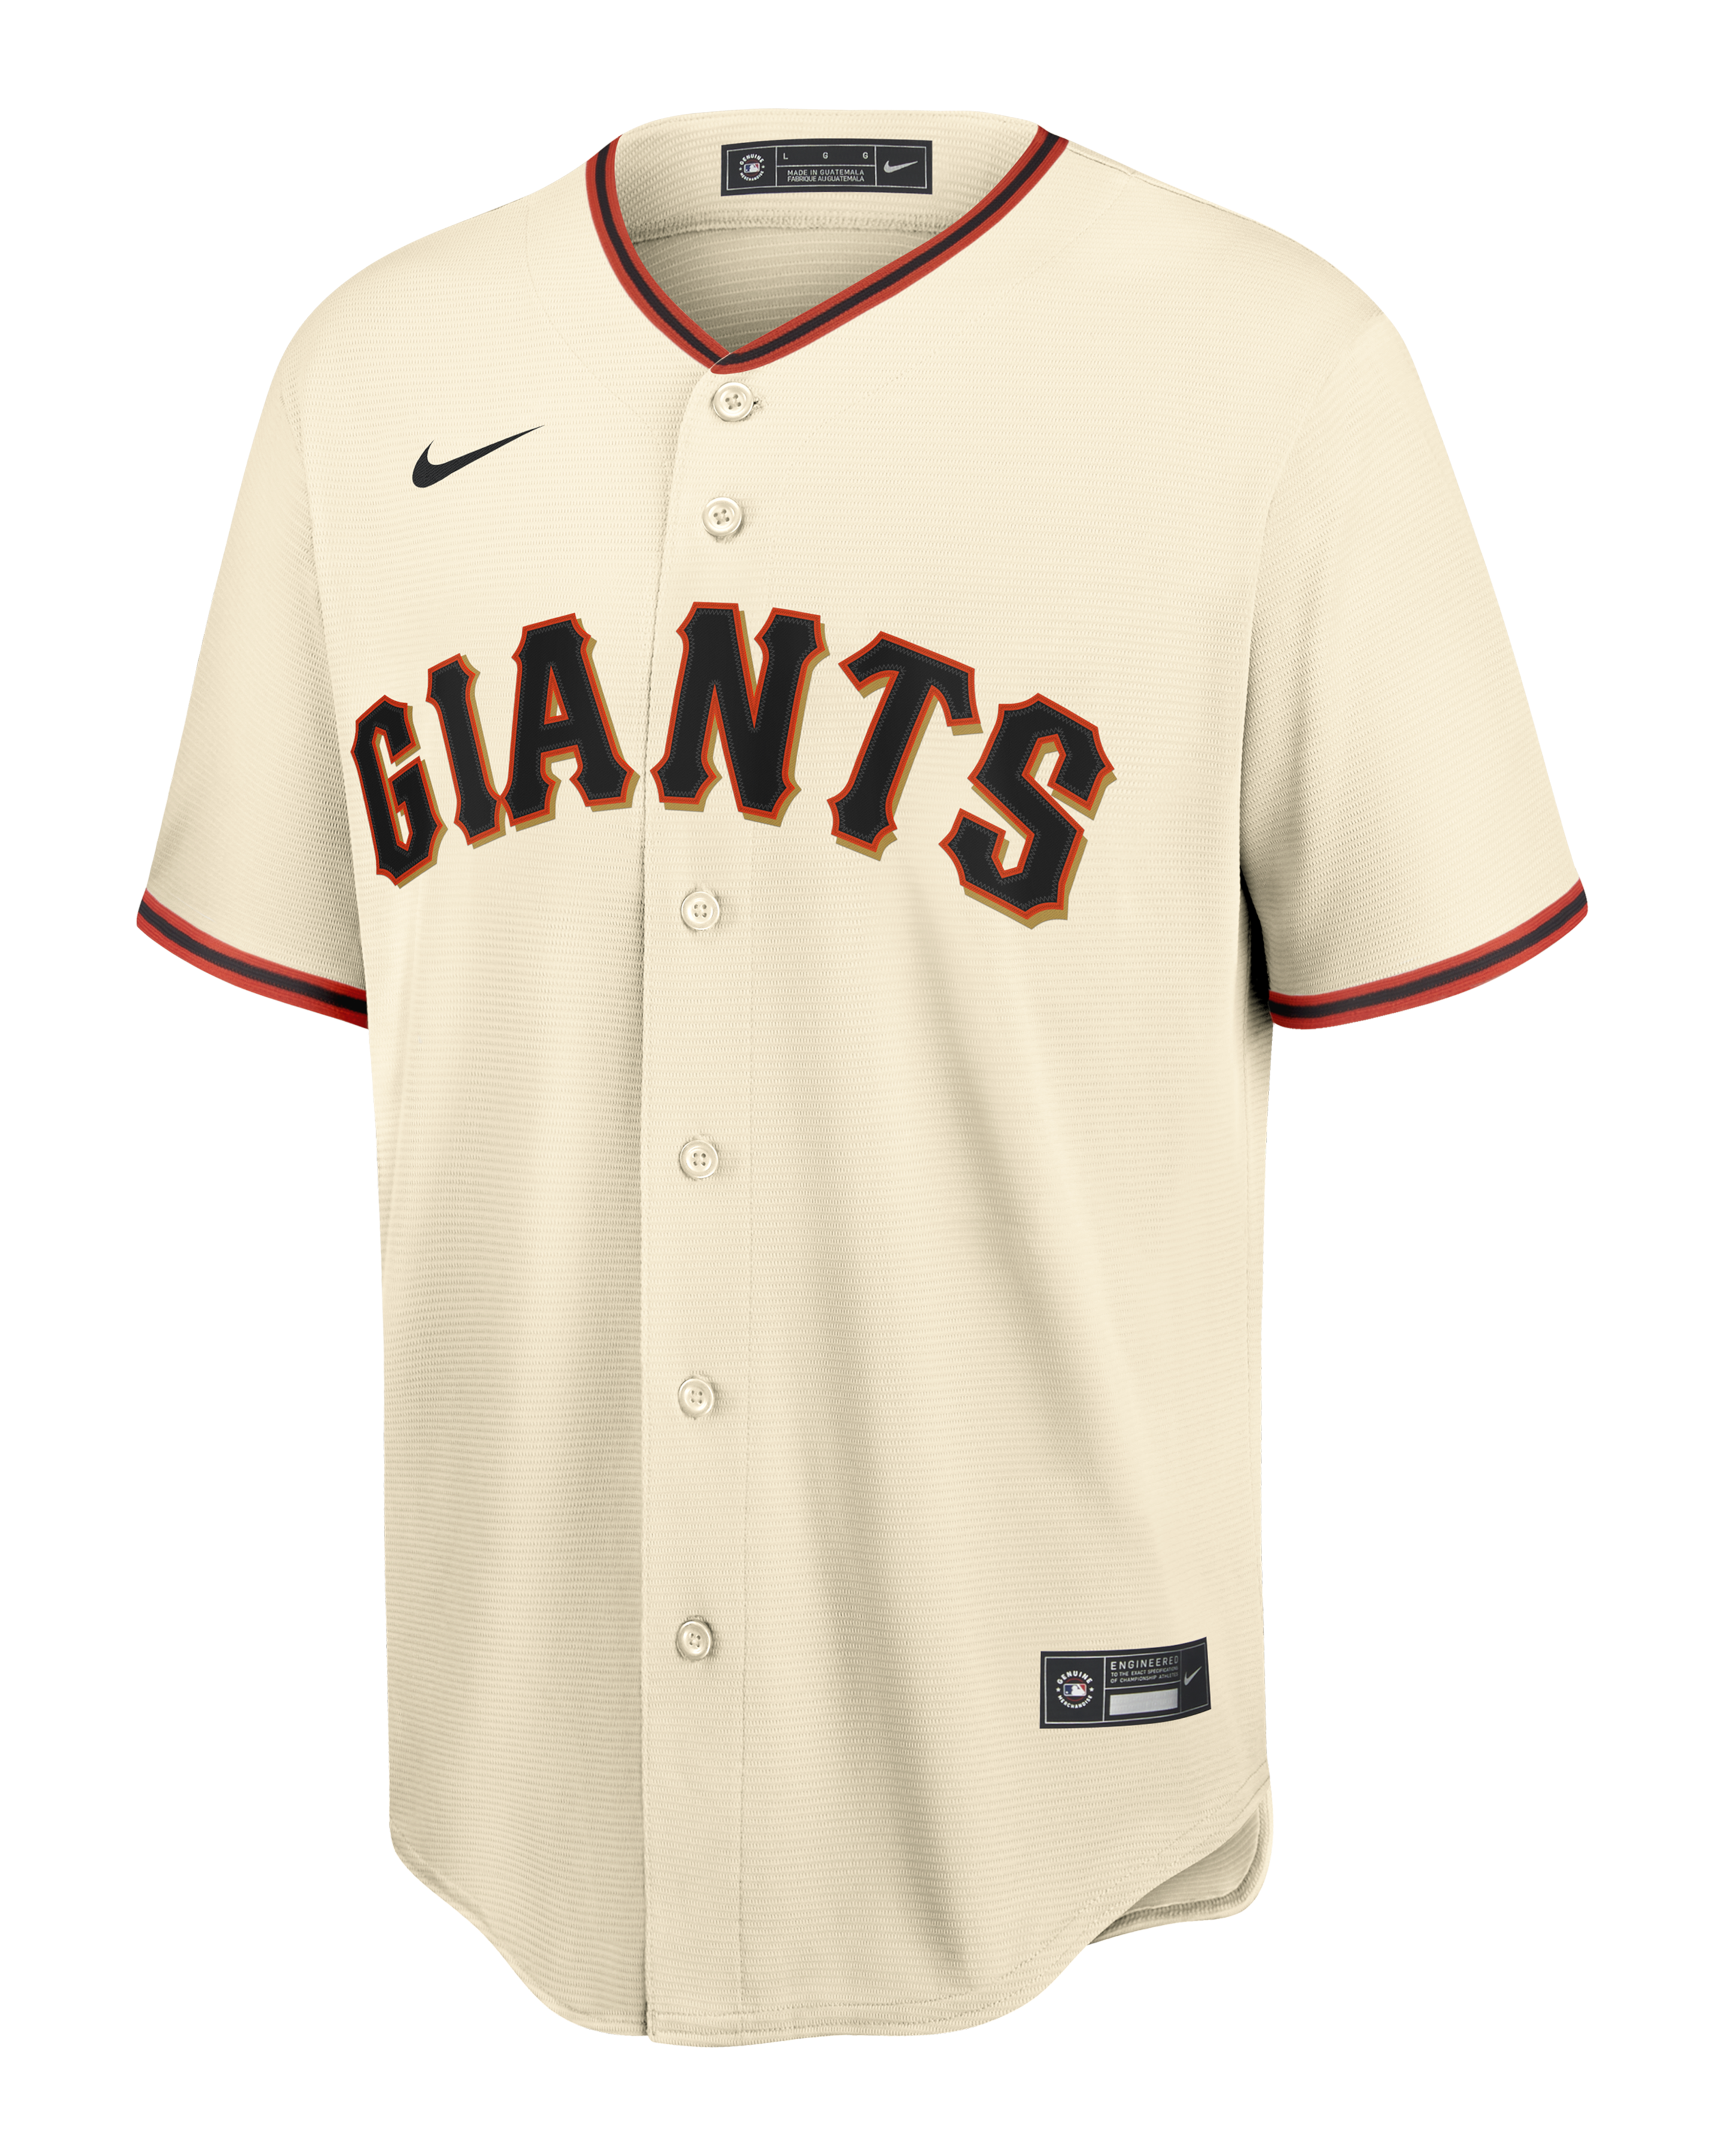 Nike x MLB San Francisco Giants Buster Posey Jersey 